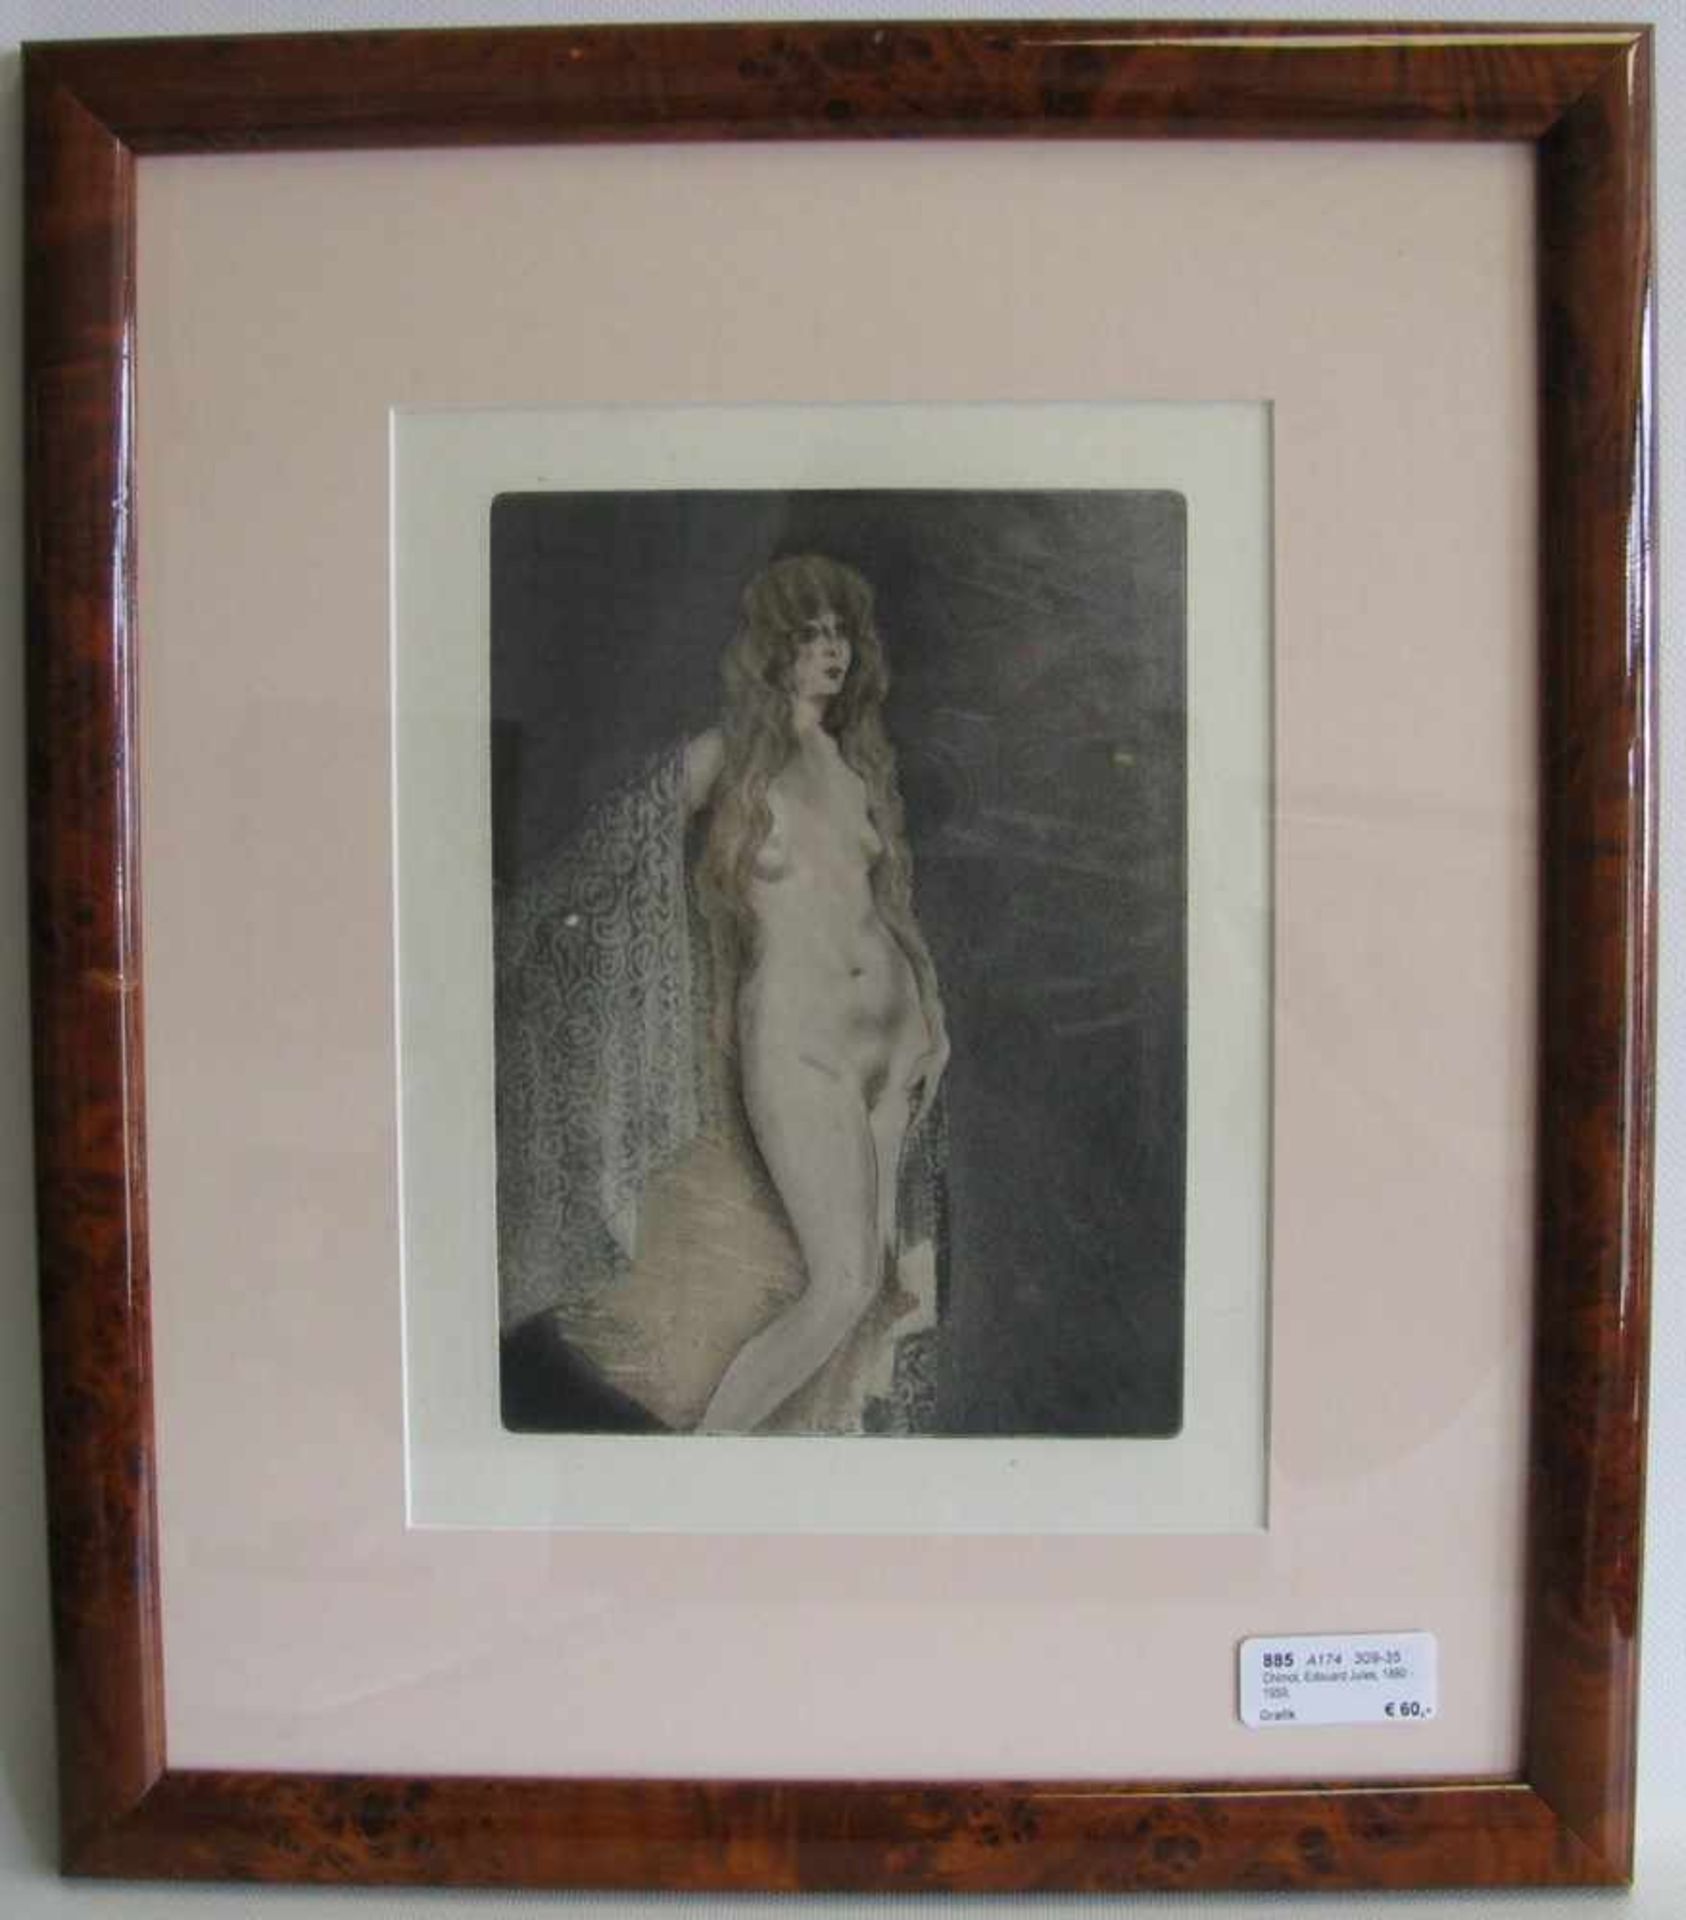 Chimot, Edouard Jules, 1880 - 1959, "Weiblicher Akt", Farblithografie, i.d.Pl.sign., 21,5 x 16 cm, - Bild 2 aus 2